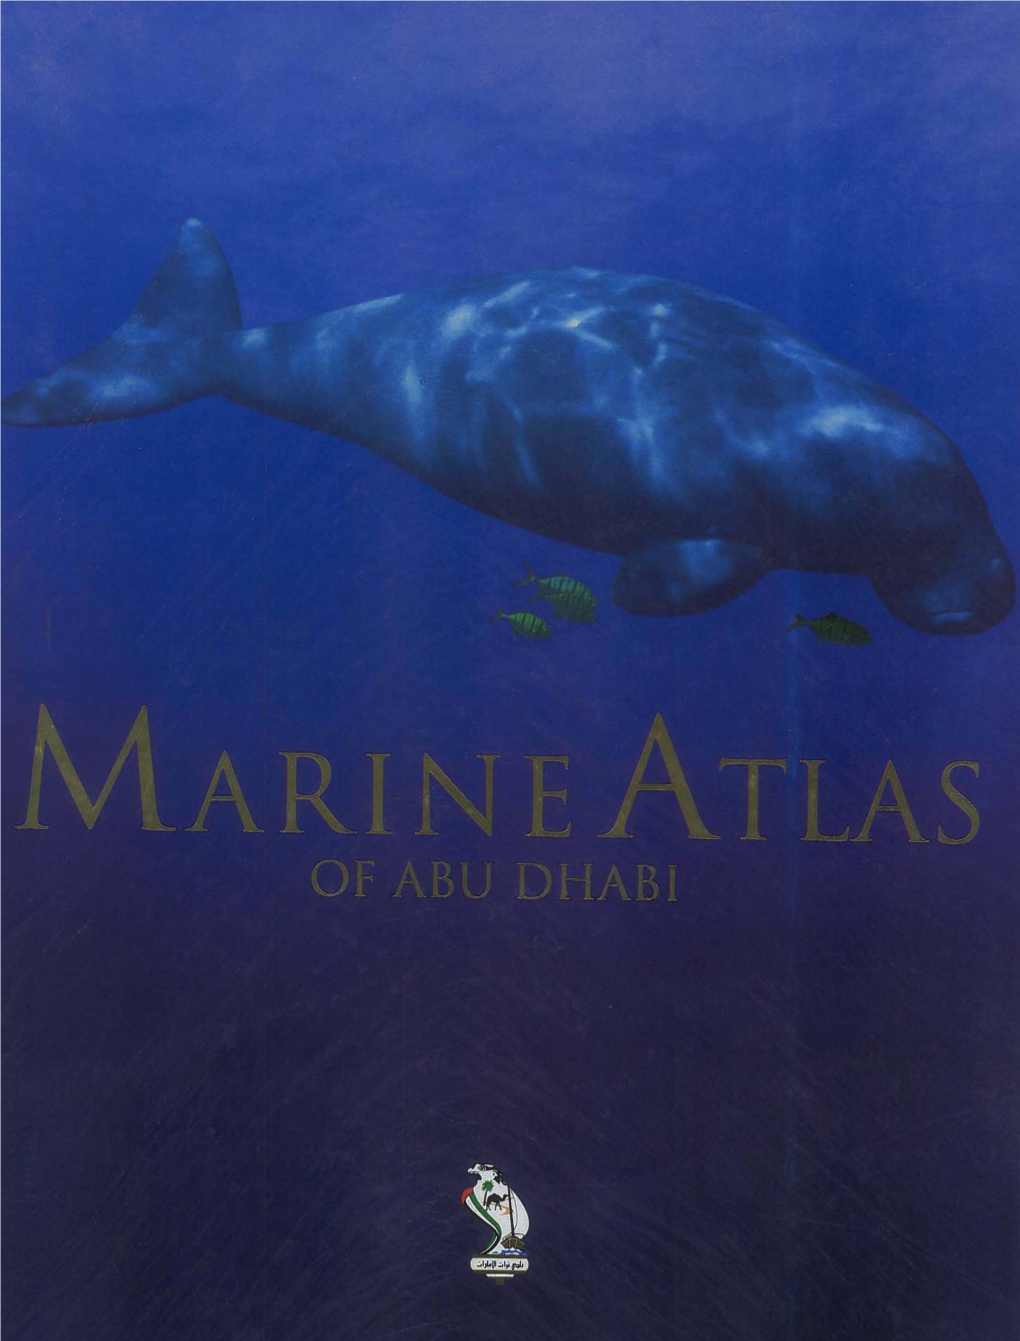 Beech-2004 Marine Atlas.Pdf